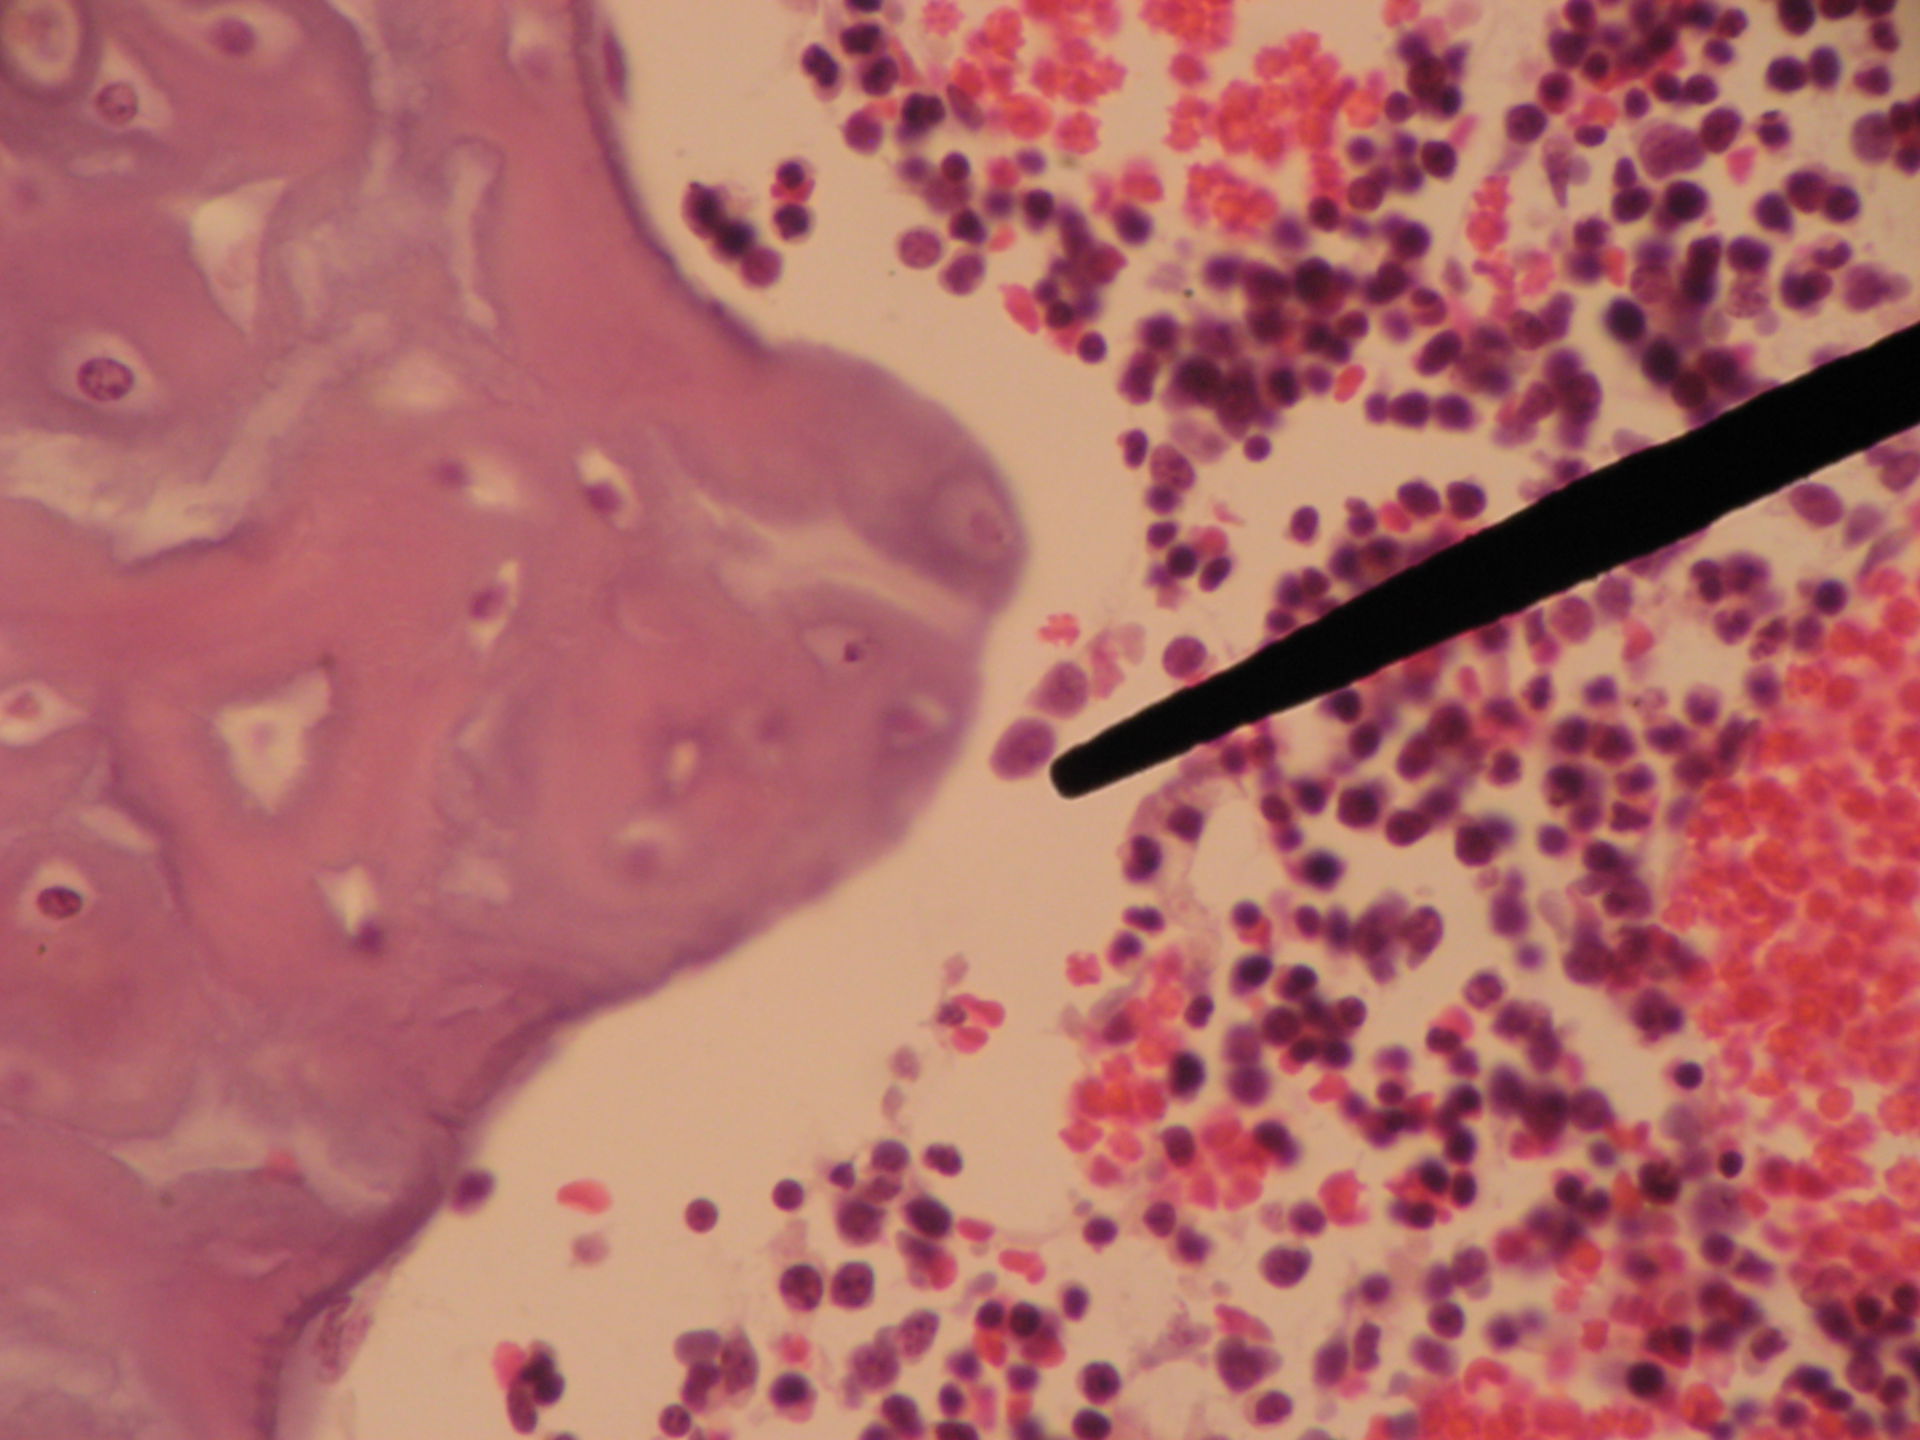 Red bone marrow of a pig fetus (3) - plasma cell